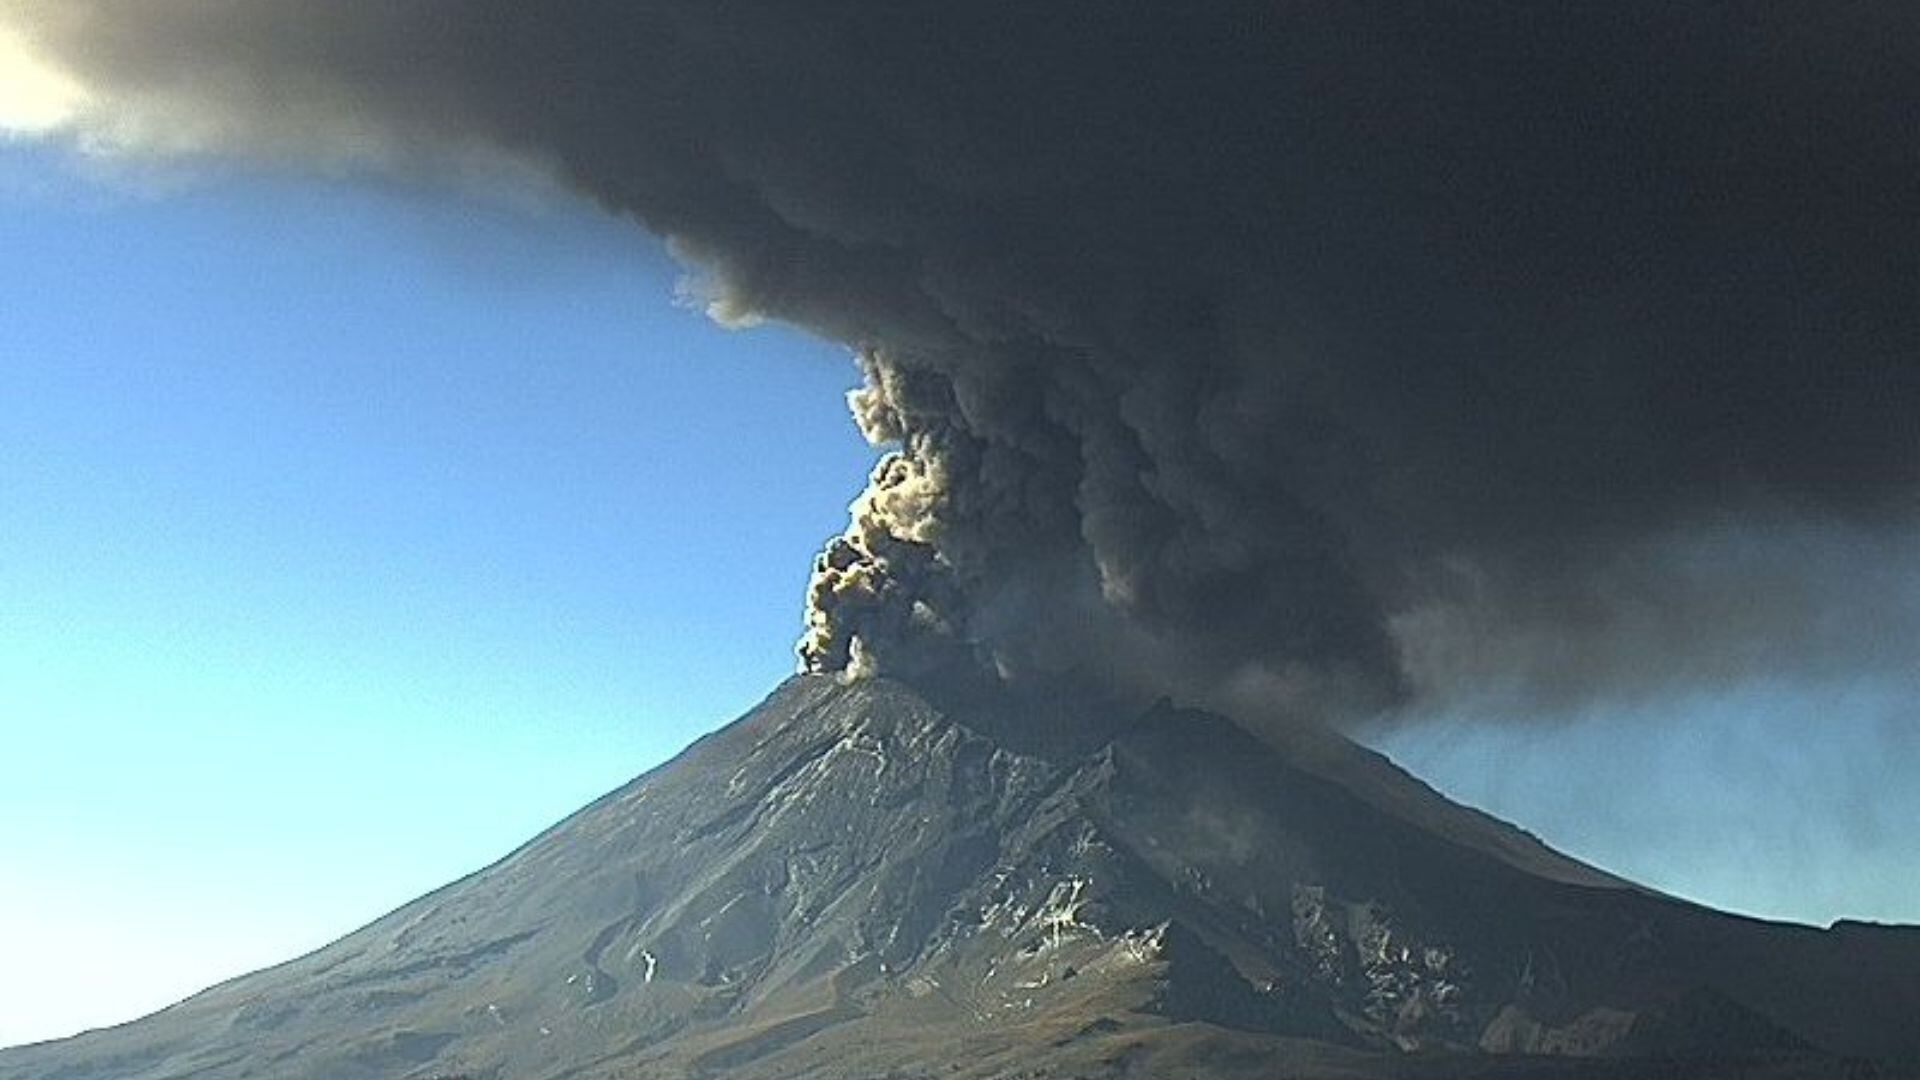 volcán Popocatépetl explosión 27 febrero